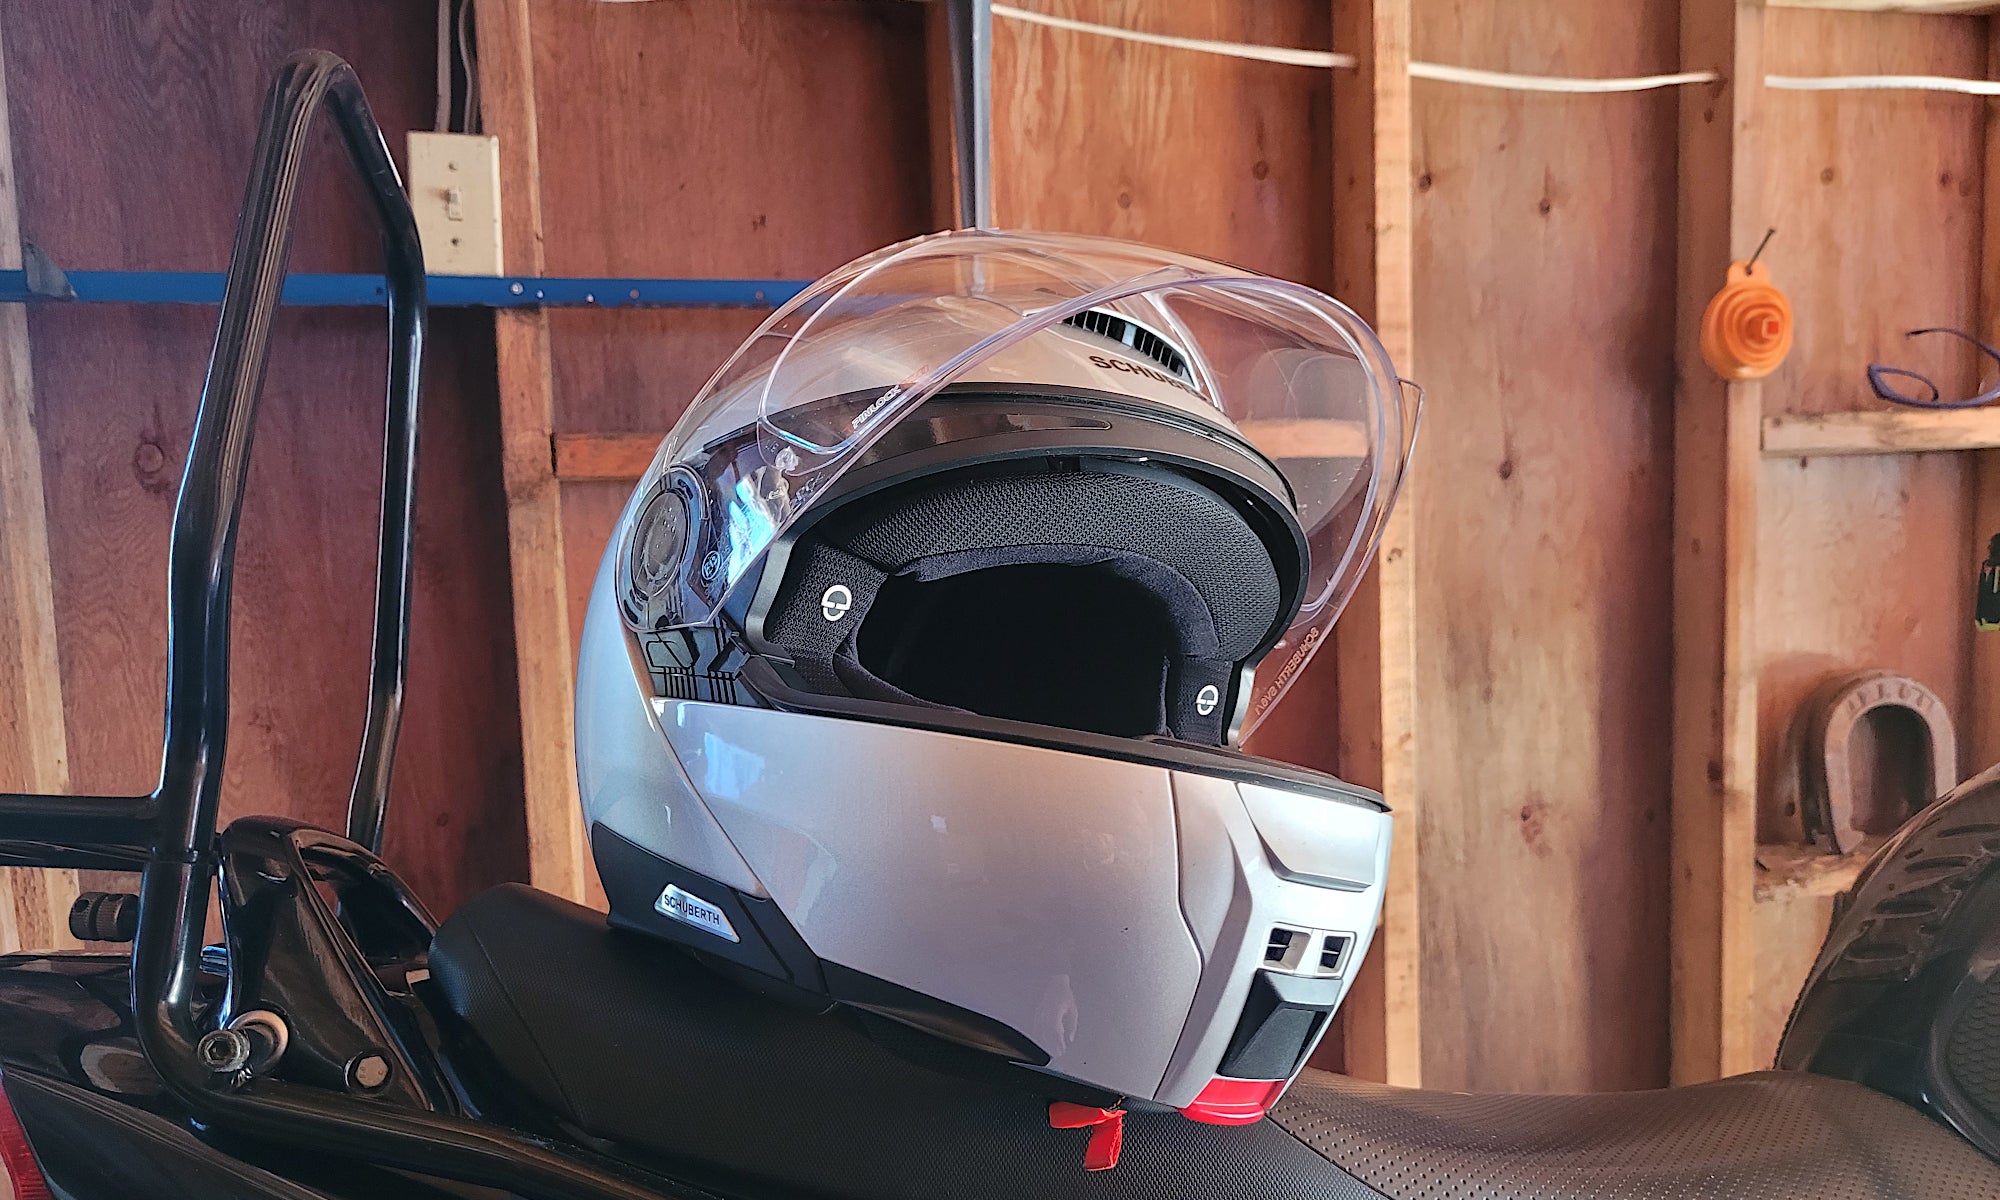 Schuberth C5 Helmet - Cycle Gear